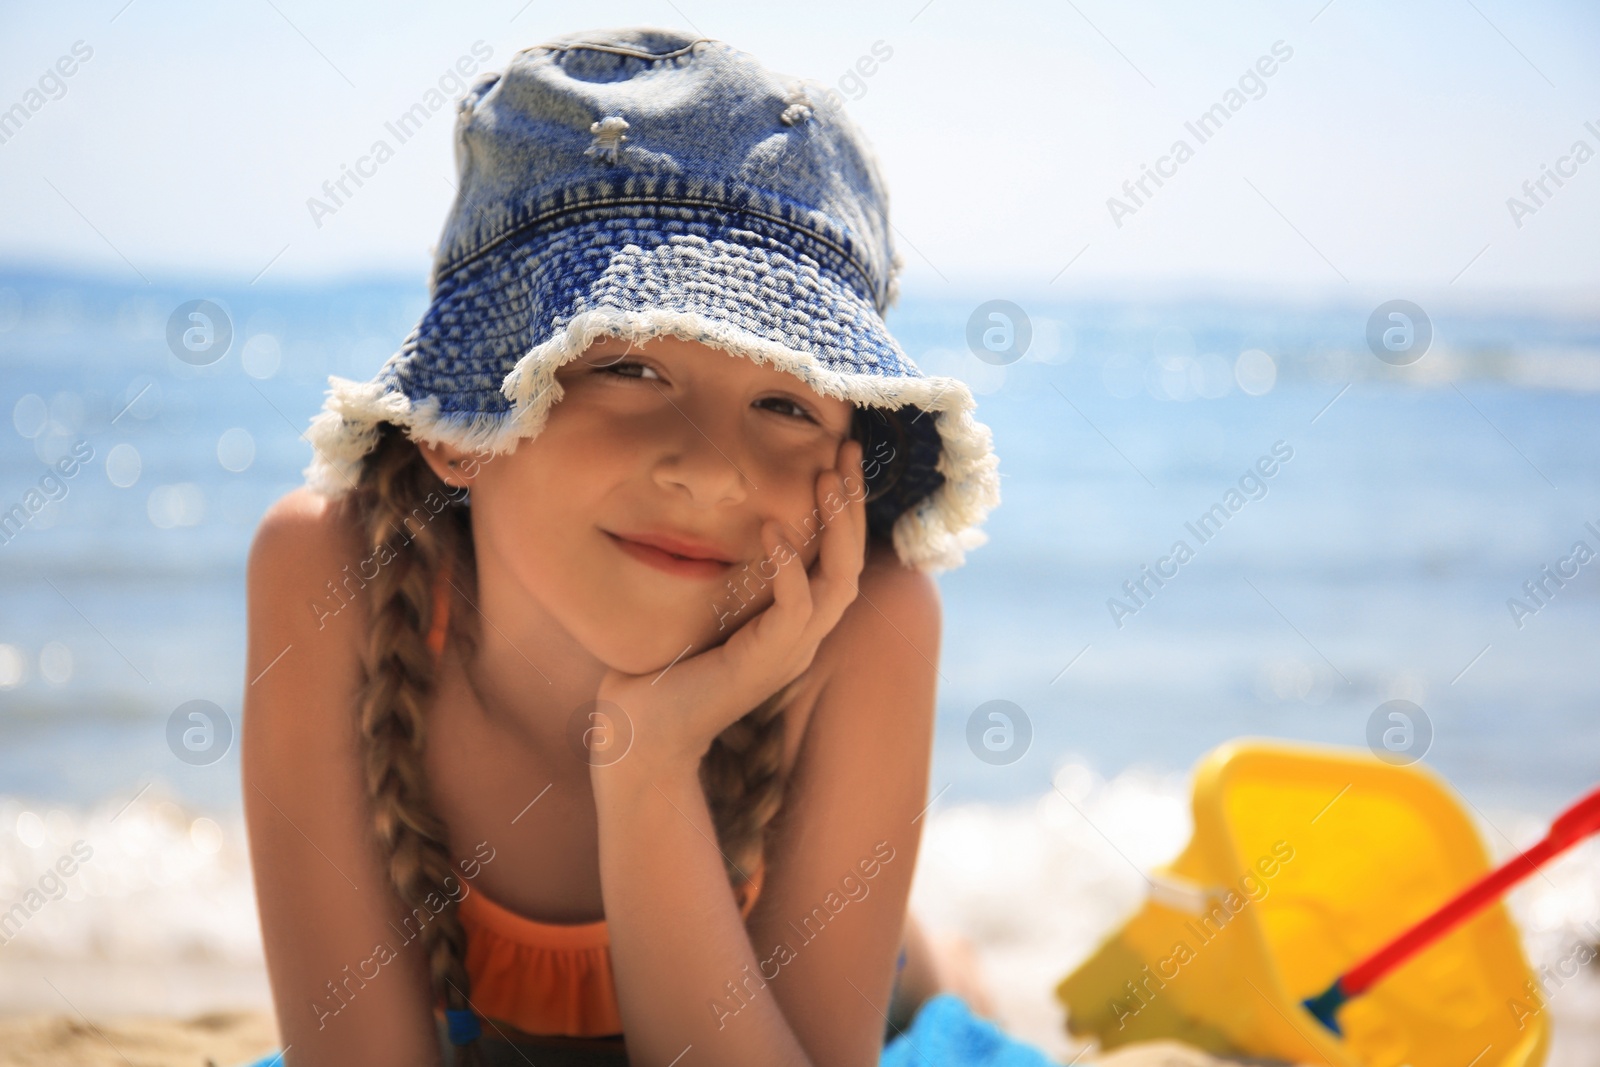 Photo of Little girl in stylish hat sunbathing on beach near sea